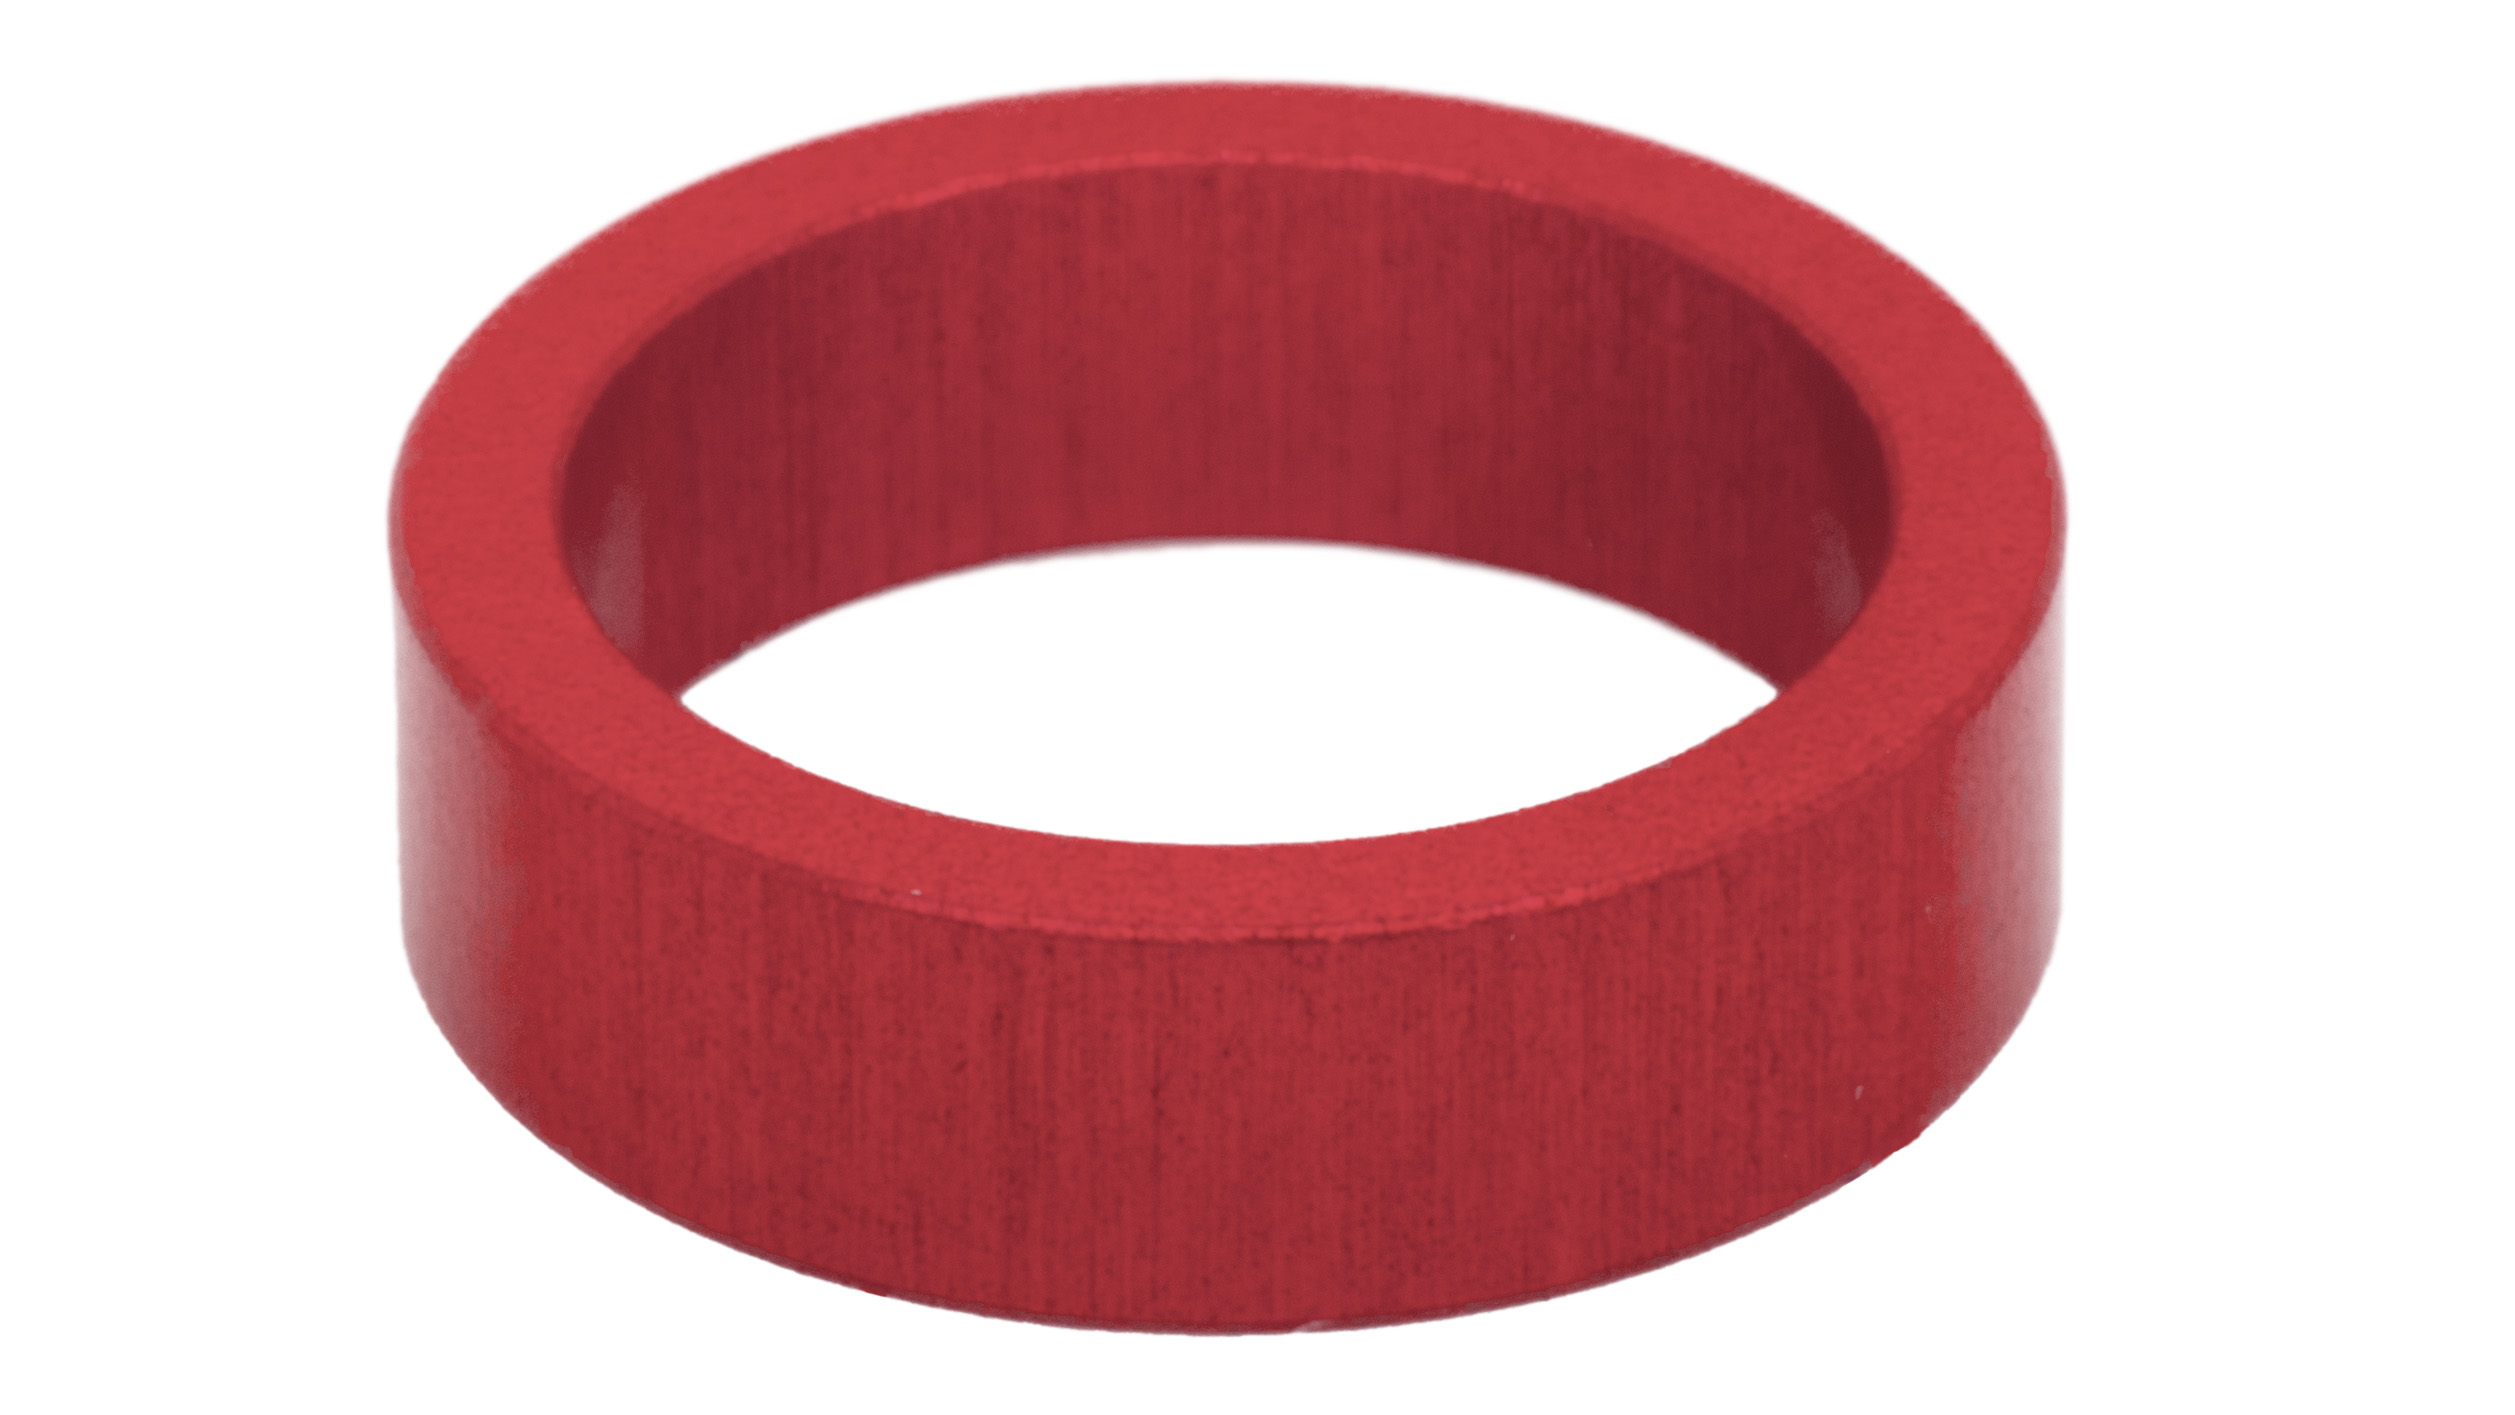 Identifikationsring, rot, für Petitpierre TSE, Klinge 1,2 mm